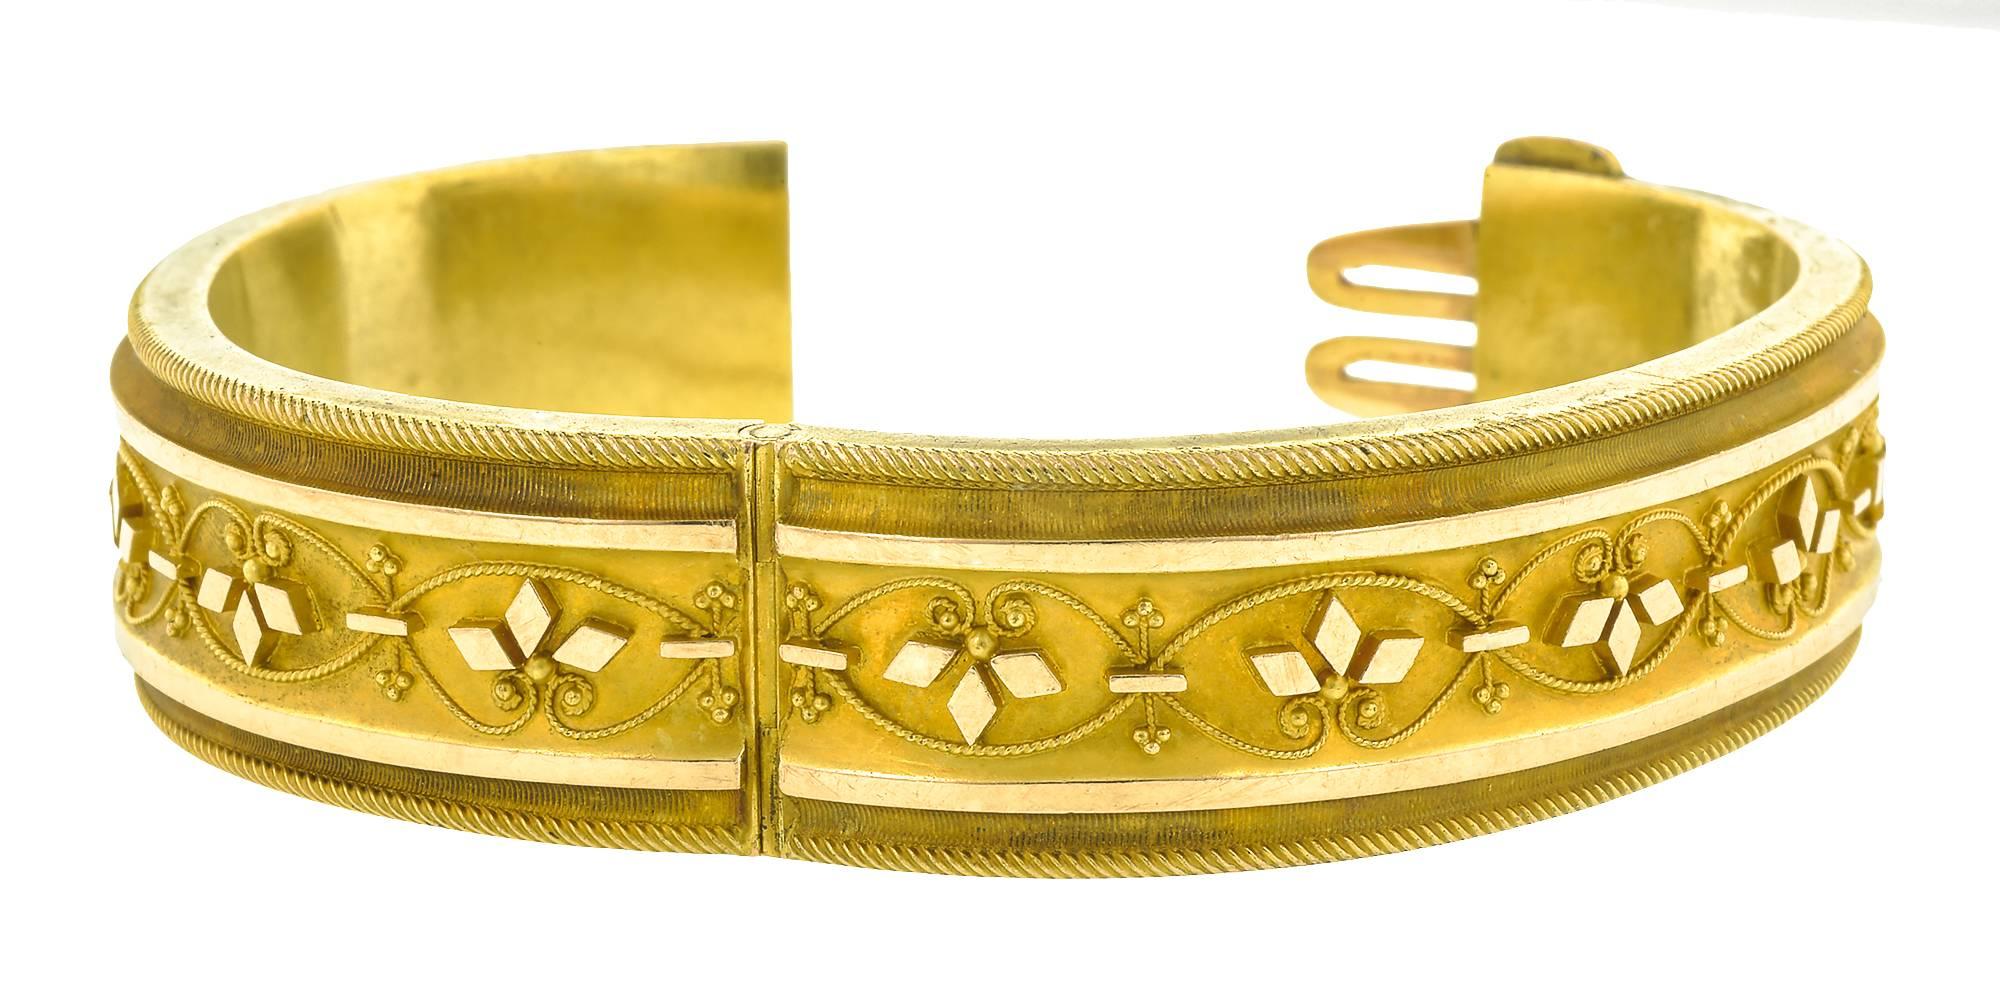 Victorian Etruscan Revival bangle bracelet measuring 5/8 inch, fashioned in 14k.
